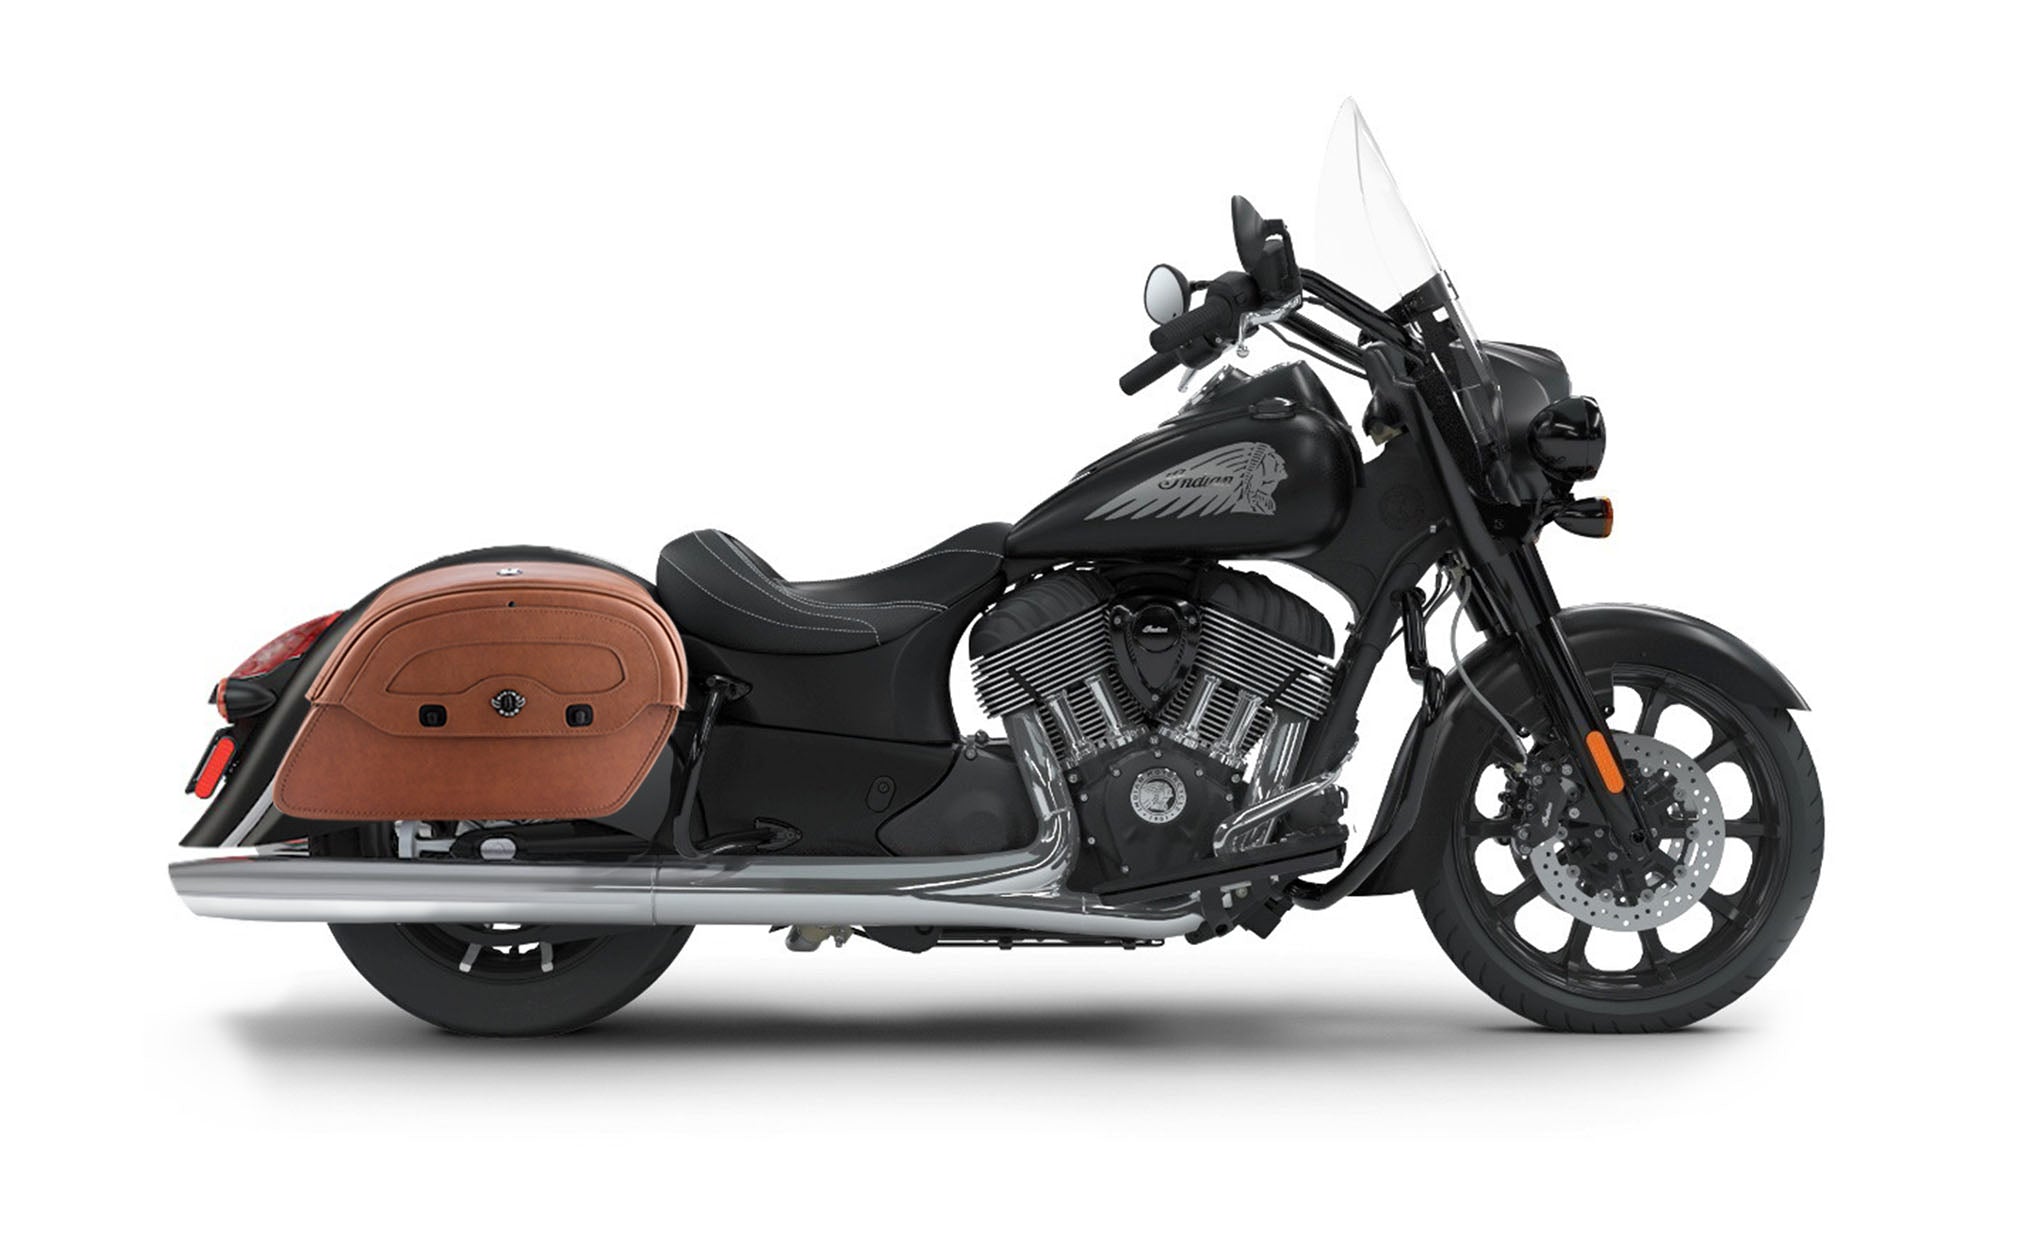 Viking Warrior Brown Large Indian Springfield Darkhorse Leather Motorcycle Saddlebags on Bike Photo @expand